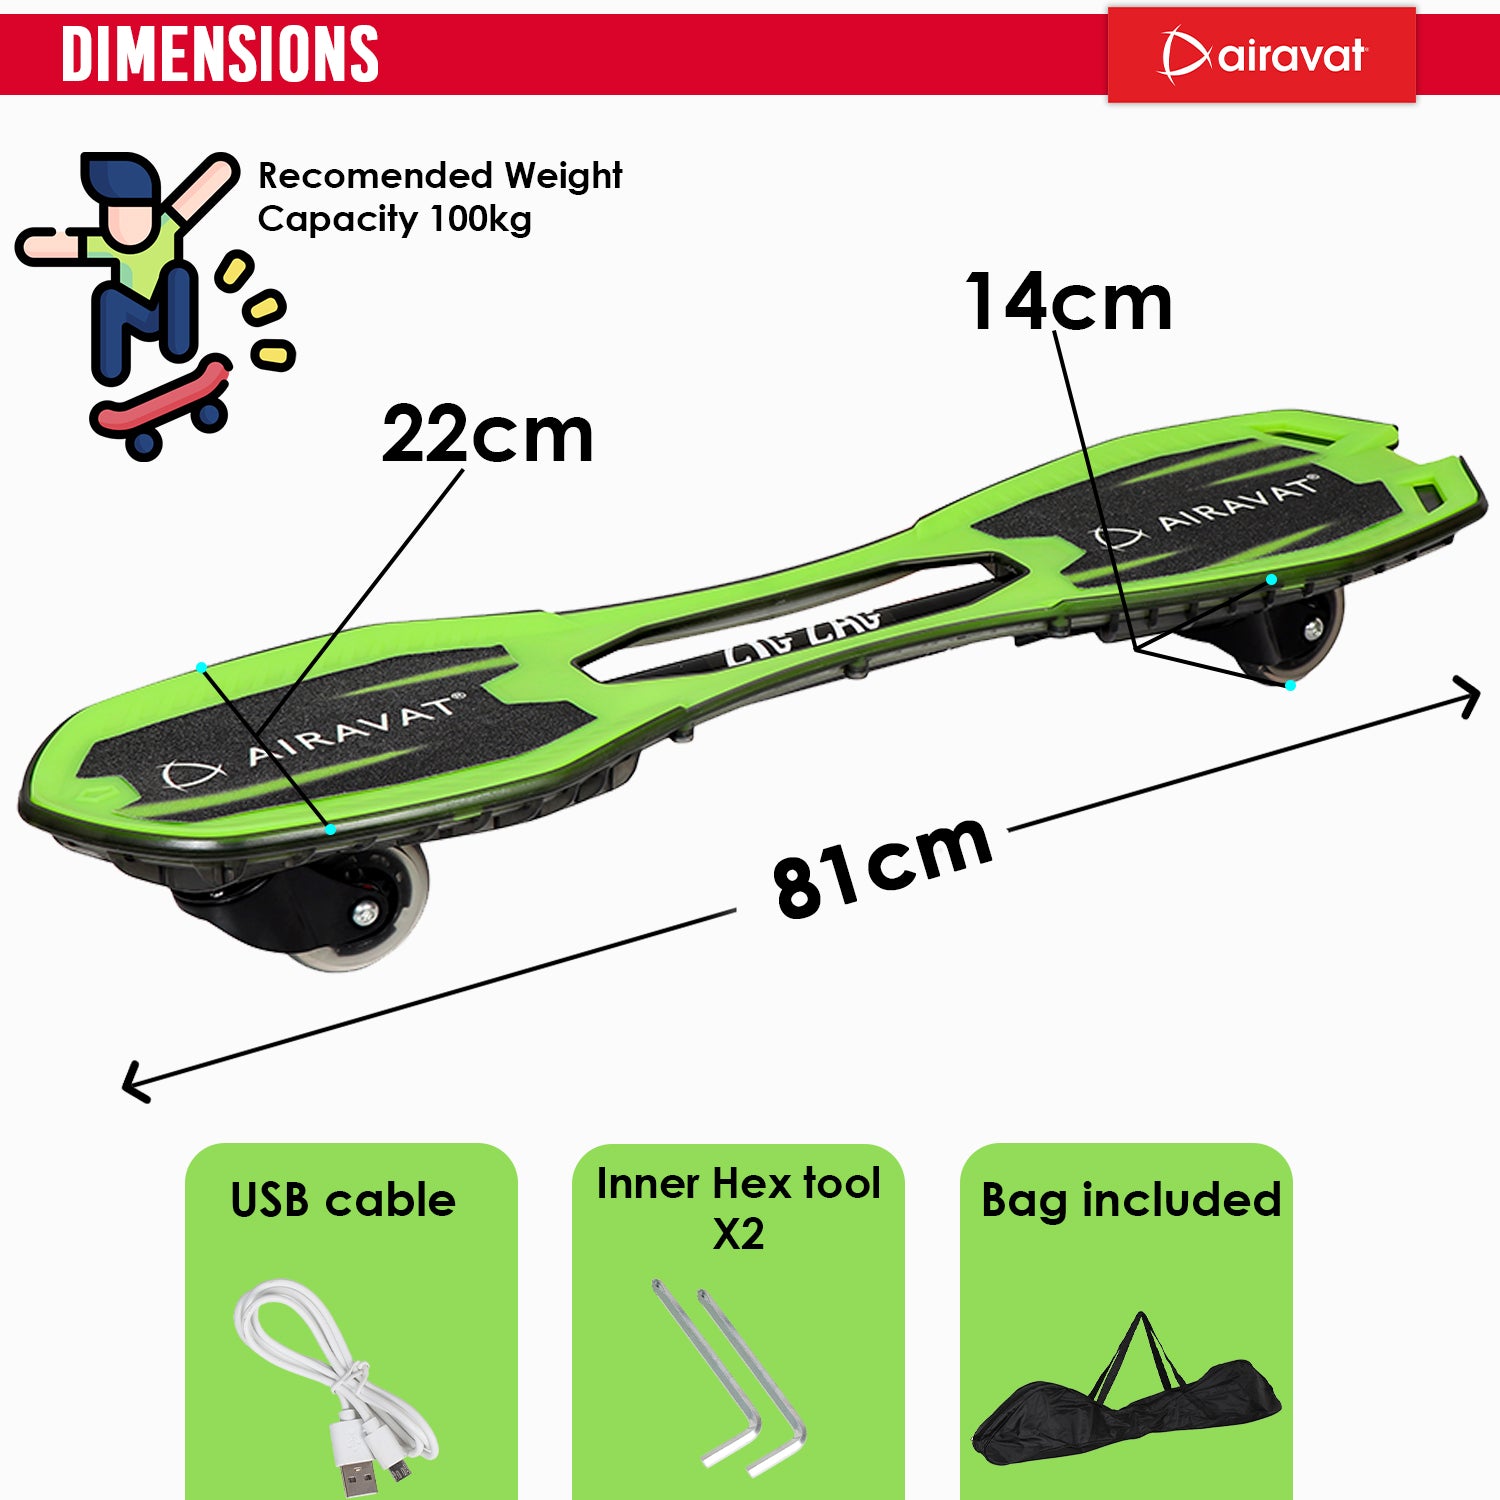 7803-Dimensions-of-zig-zag-waveboard-green